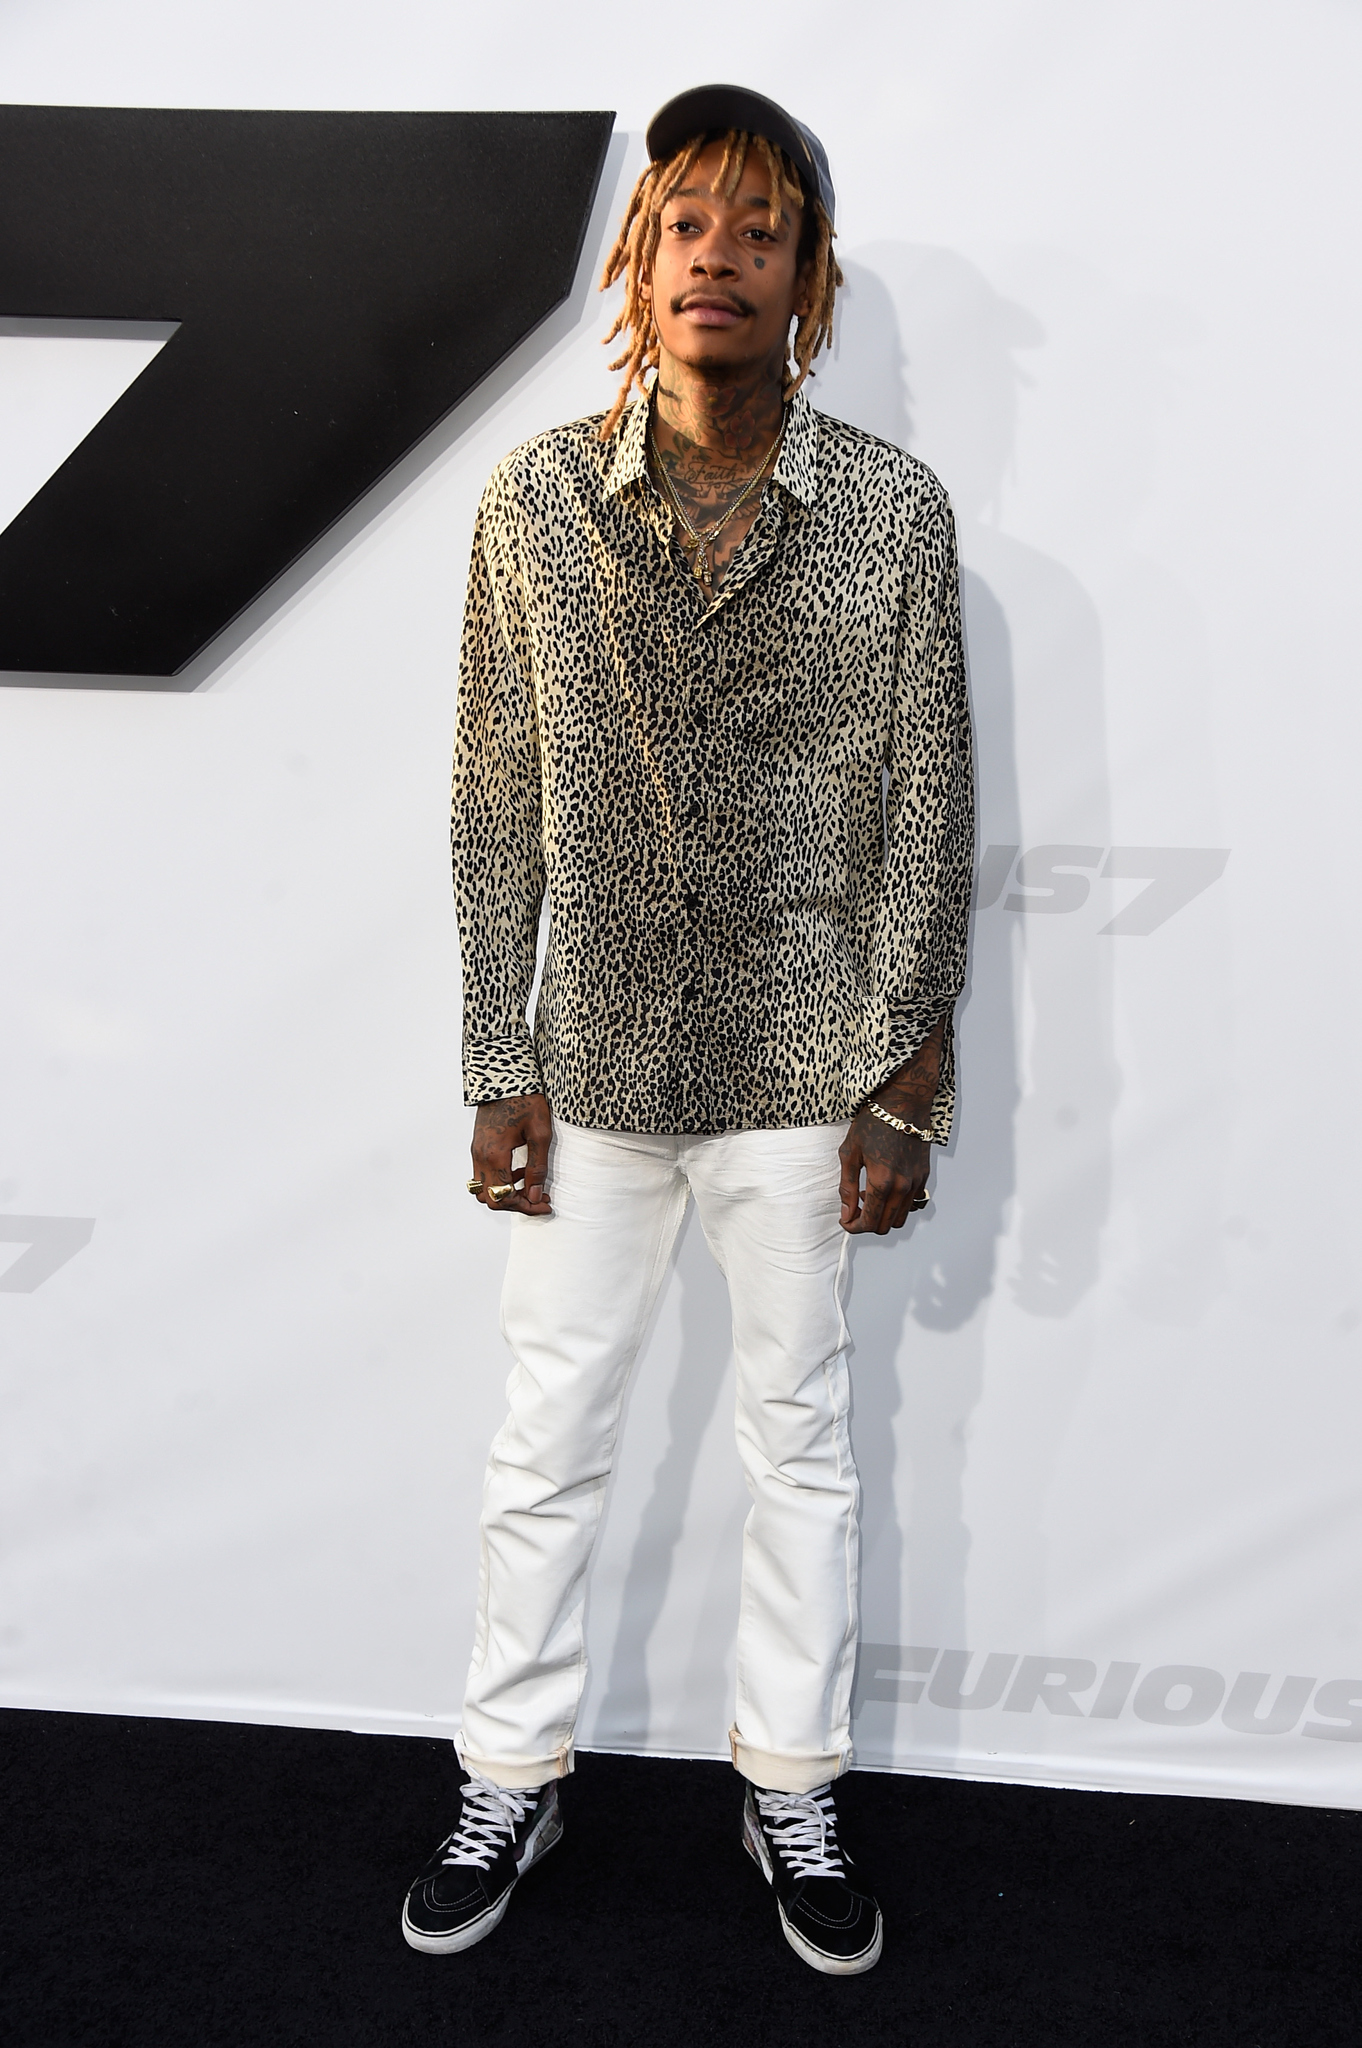 Wiz Khalifa at event of Greiti ir isiute 7 (2015)